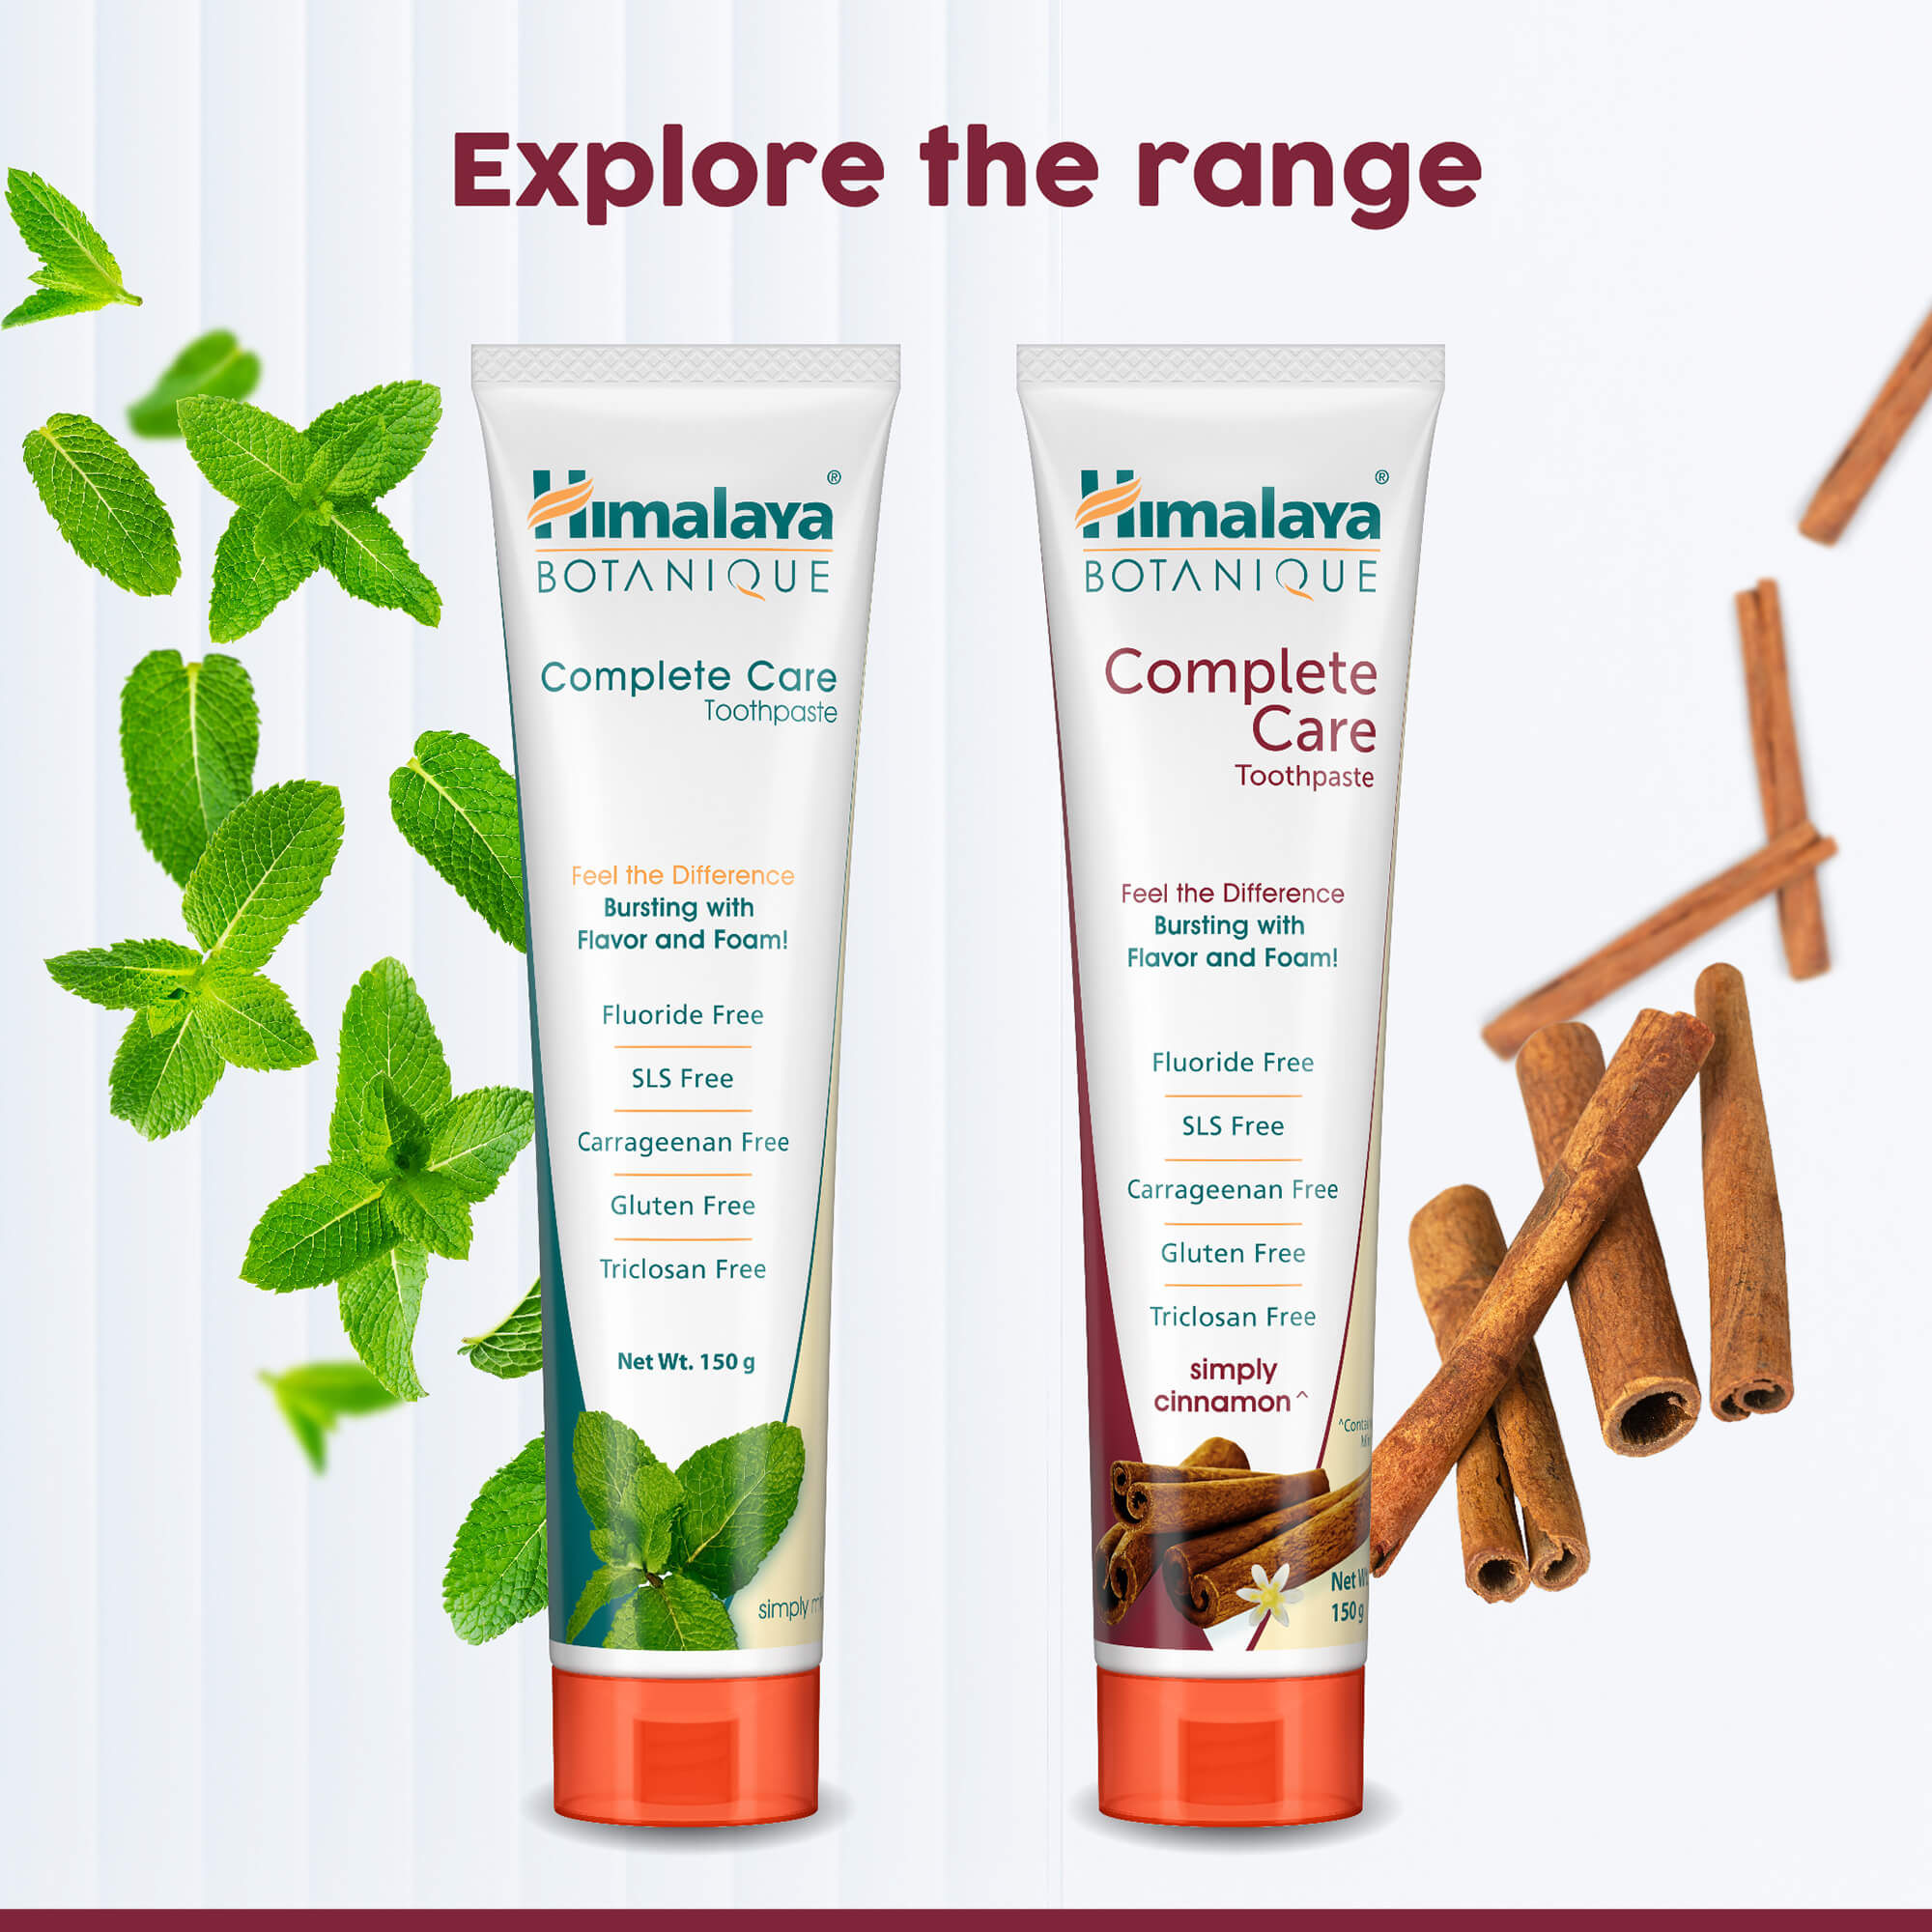 Himalaya BOTANIQUE Complete Care Toothpaste Range